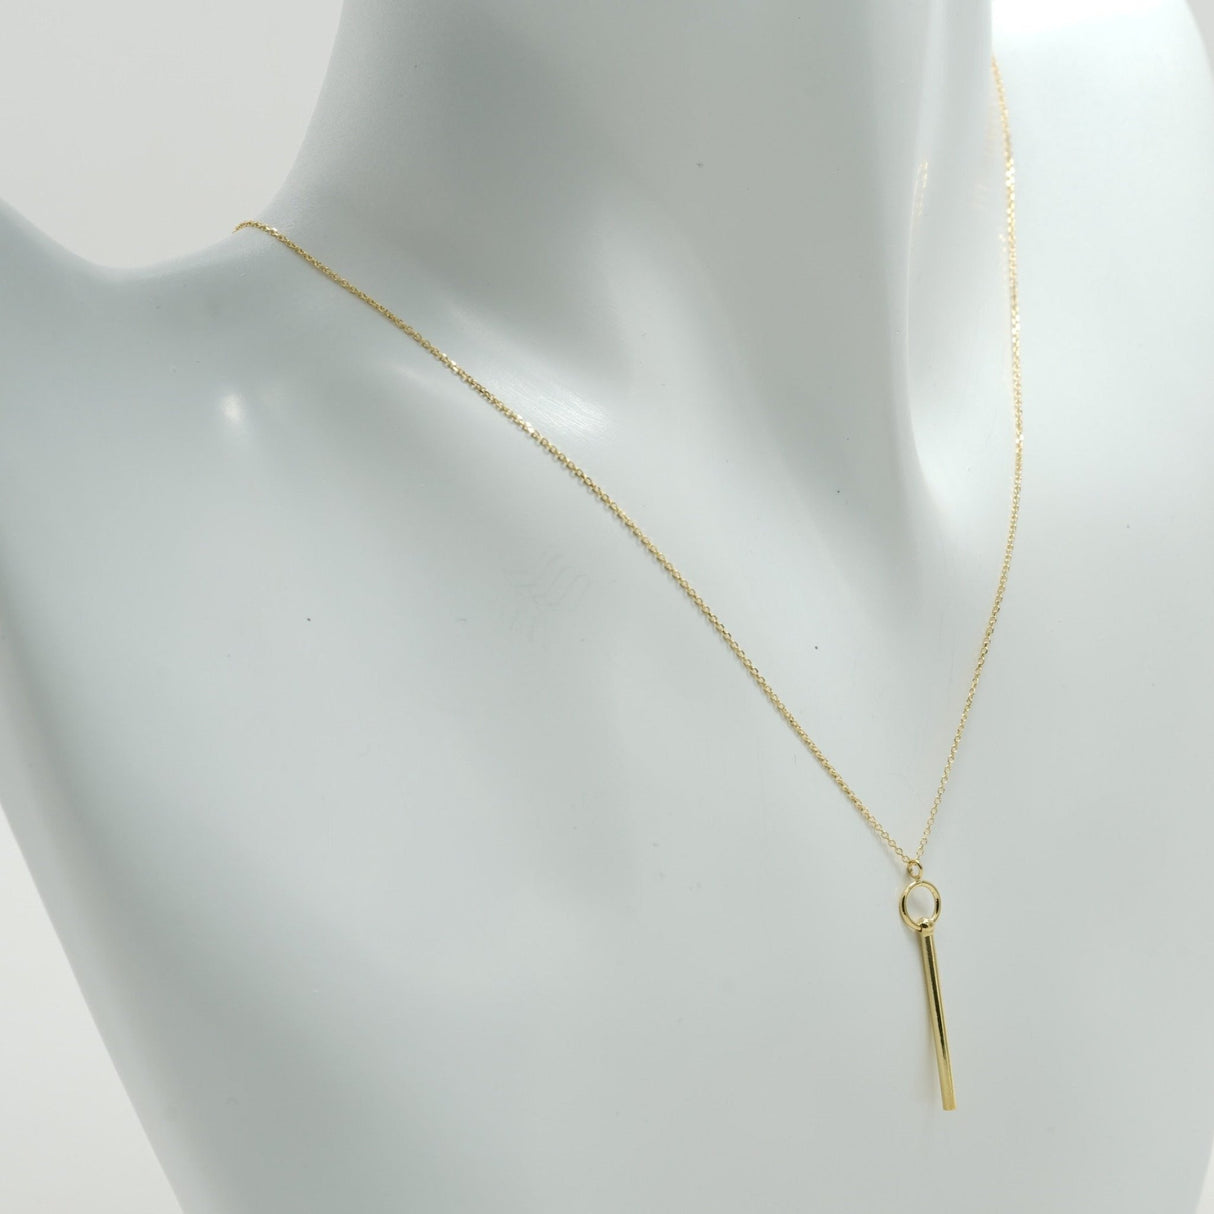 Gold tube necklace, Layering Necklace, Dainty tube pendant